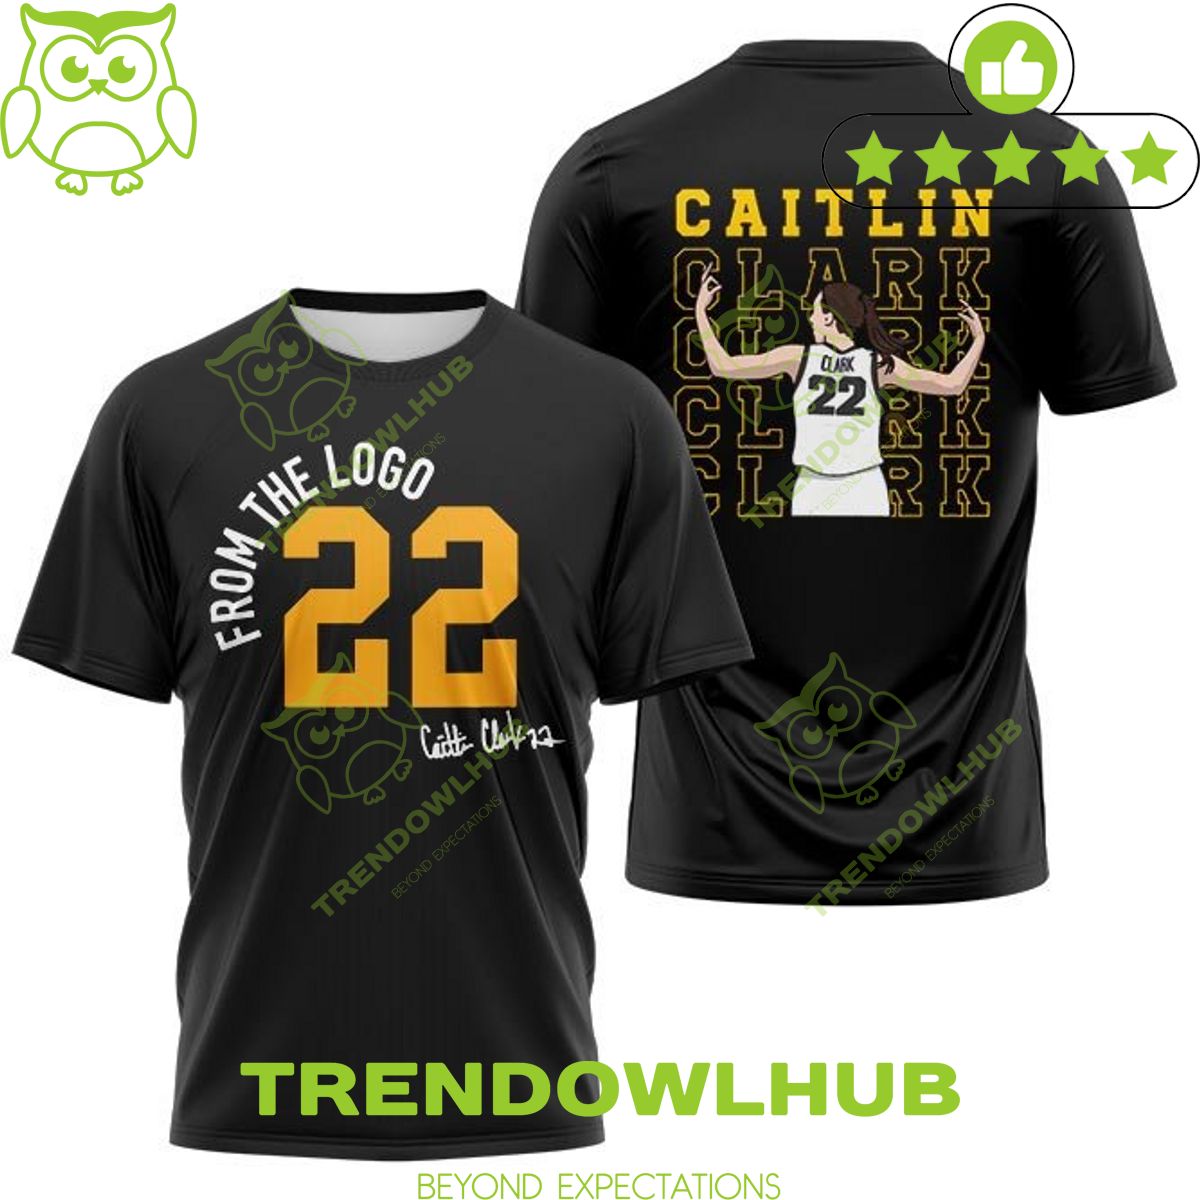 Caitlin Clark Iowa Hawkeyes of the Big Ten Conference Basketball t shirt